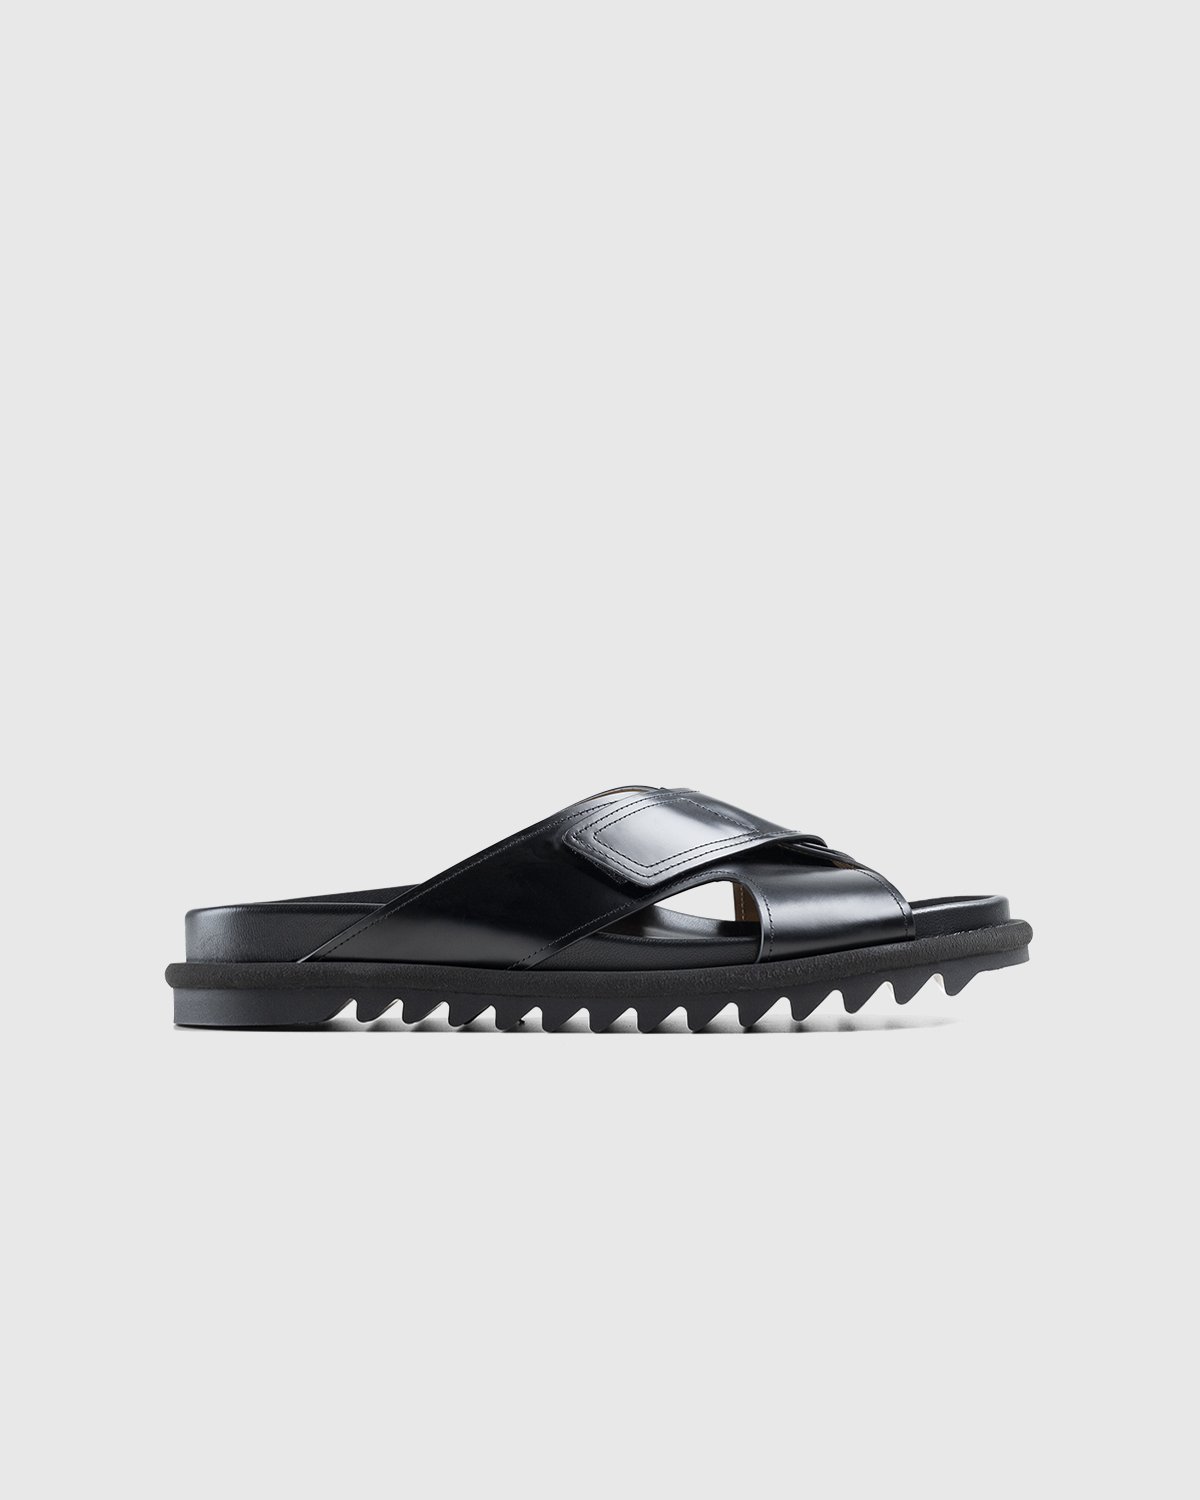 Dries van Noten - Leather Criss-Cross Sandals Black - Footwear - Black - Image 1